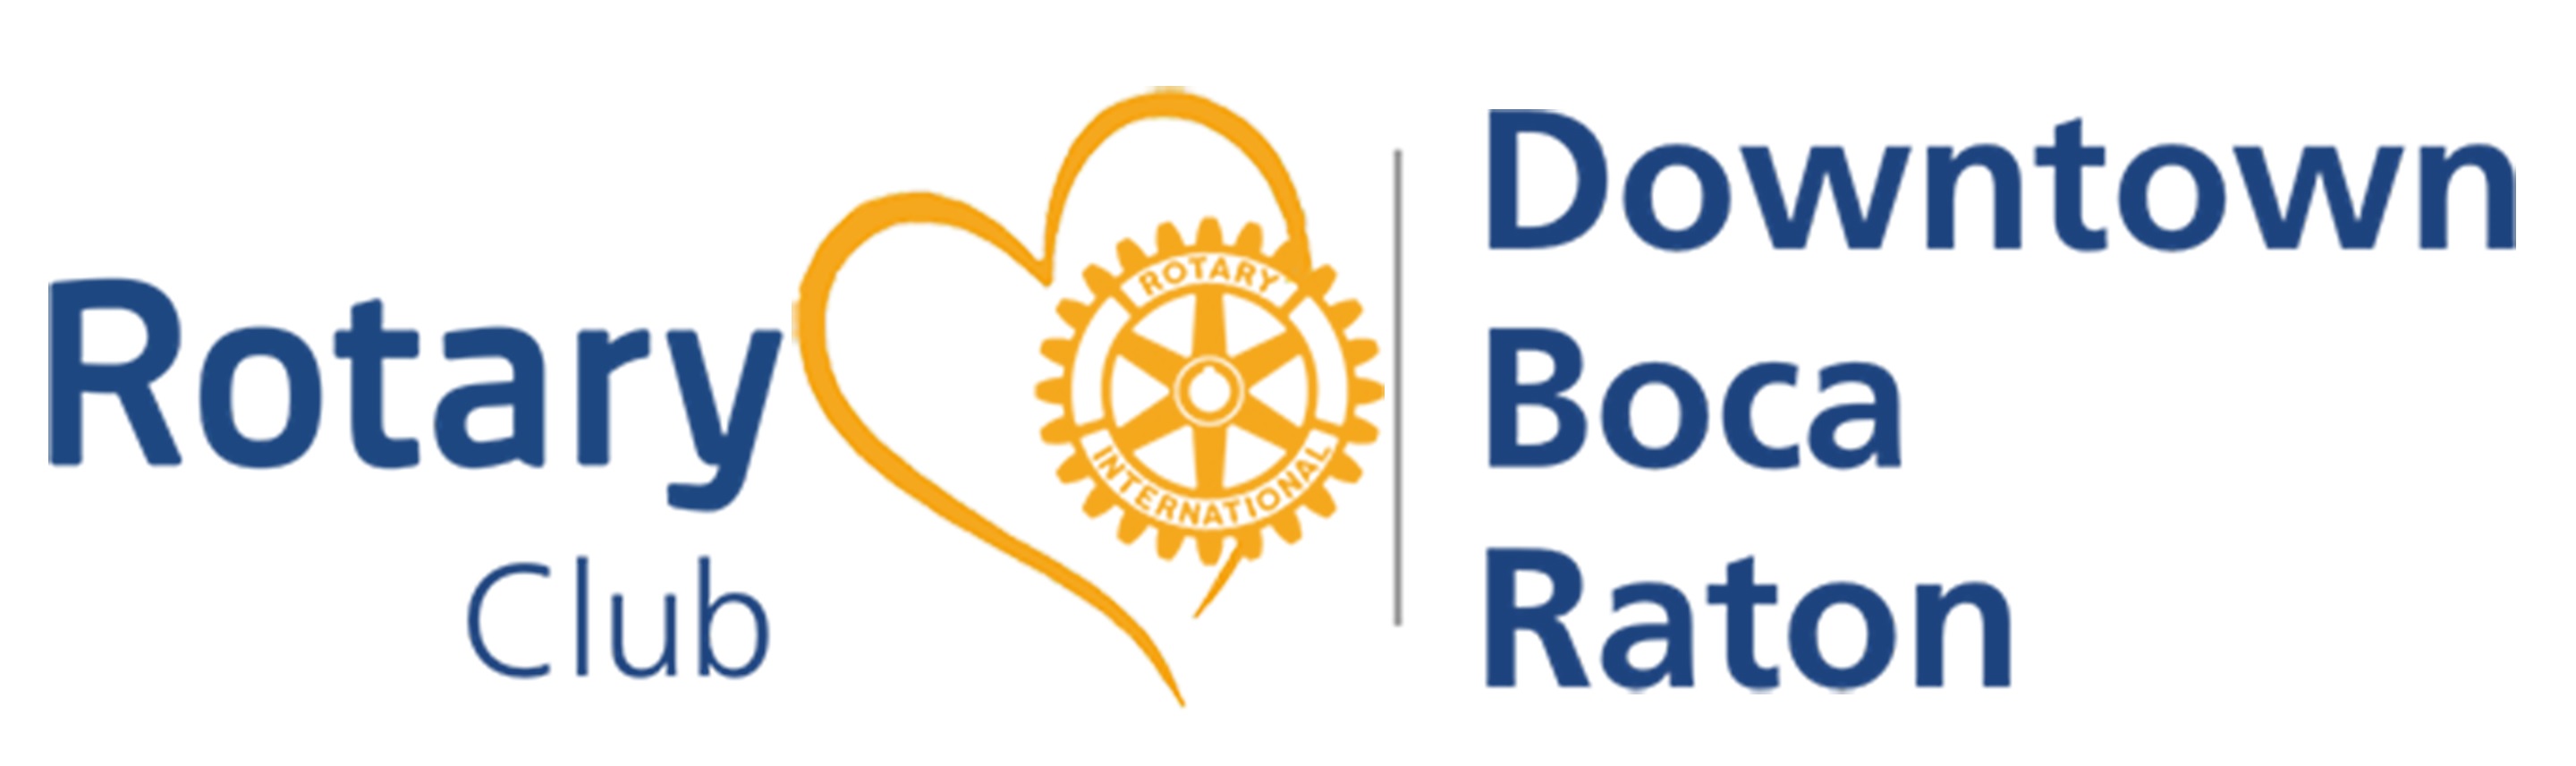 10 Rotary Club of Downtown Boca Raton